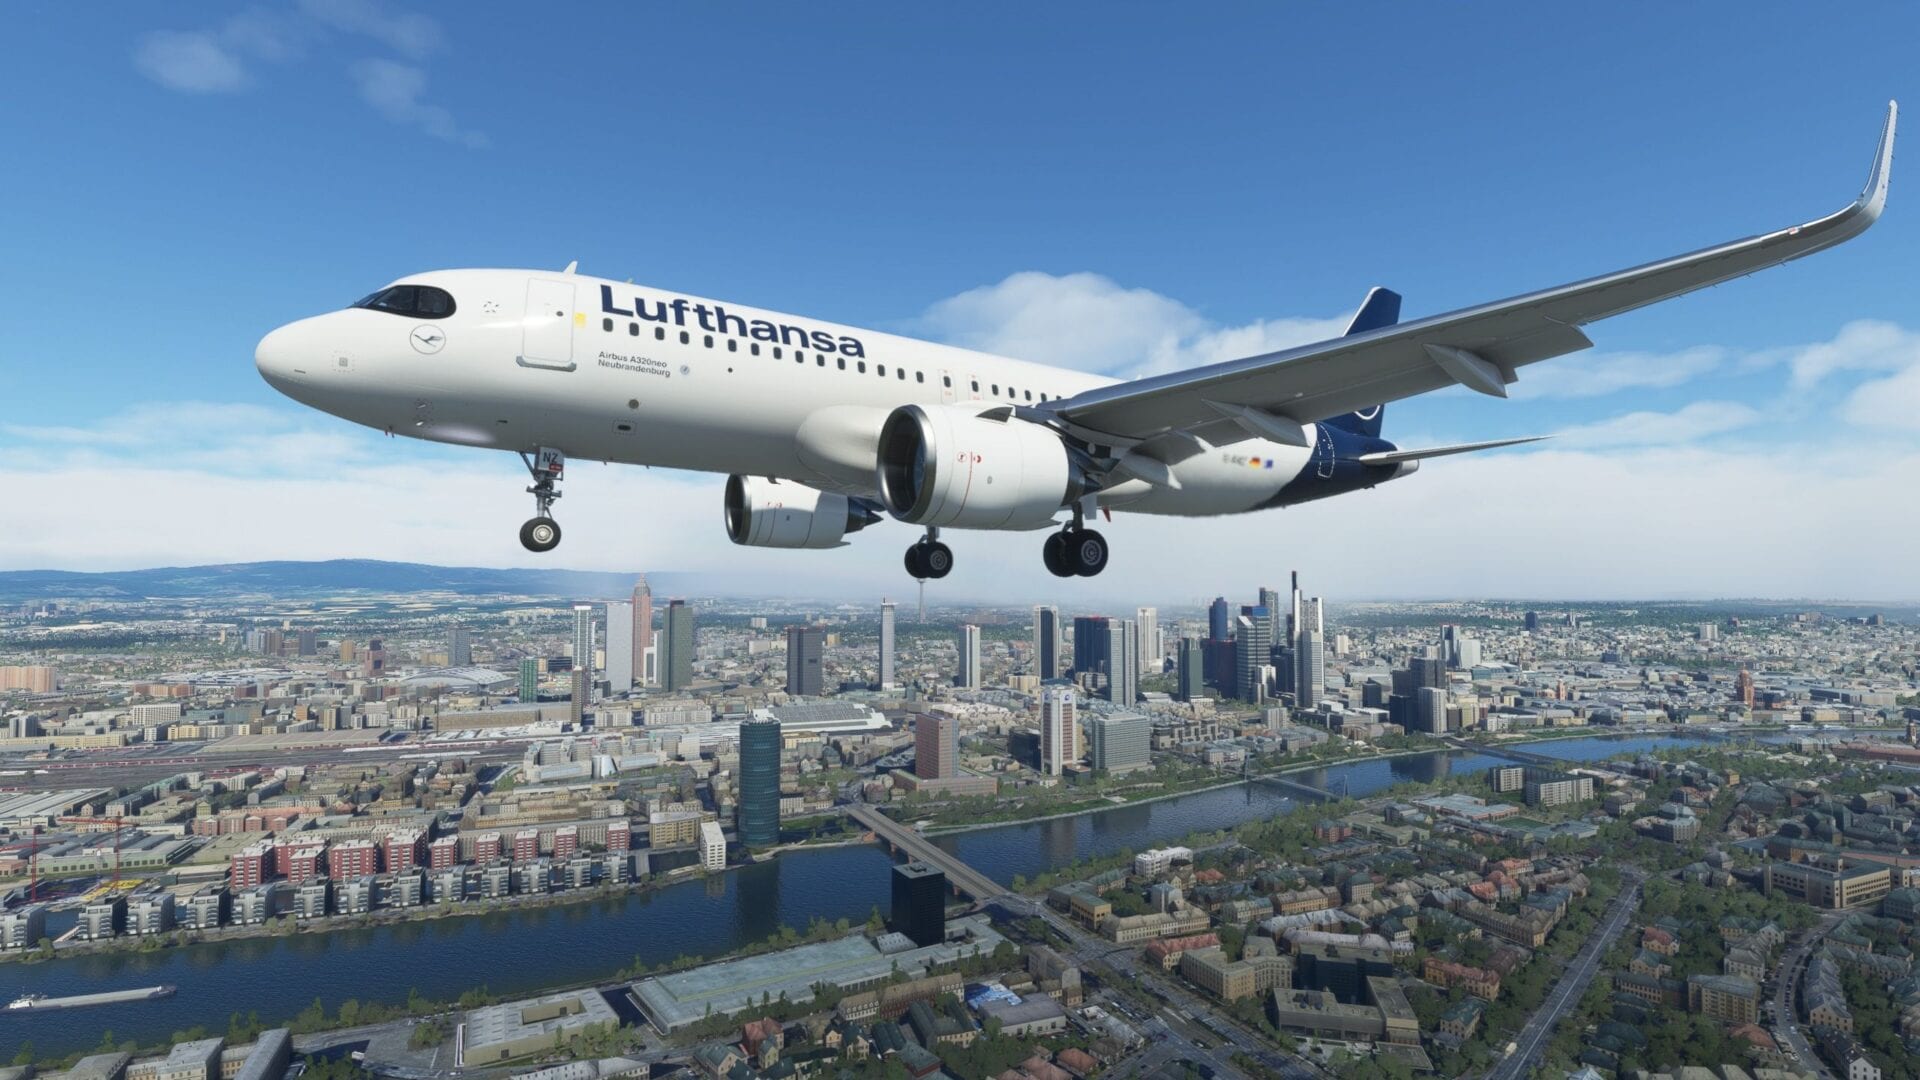 Microsoft Flight Simulator Orbx